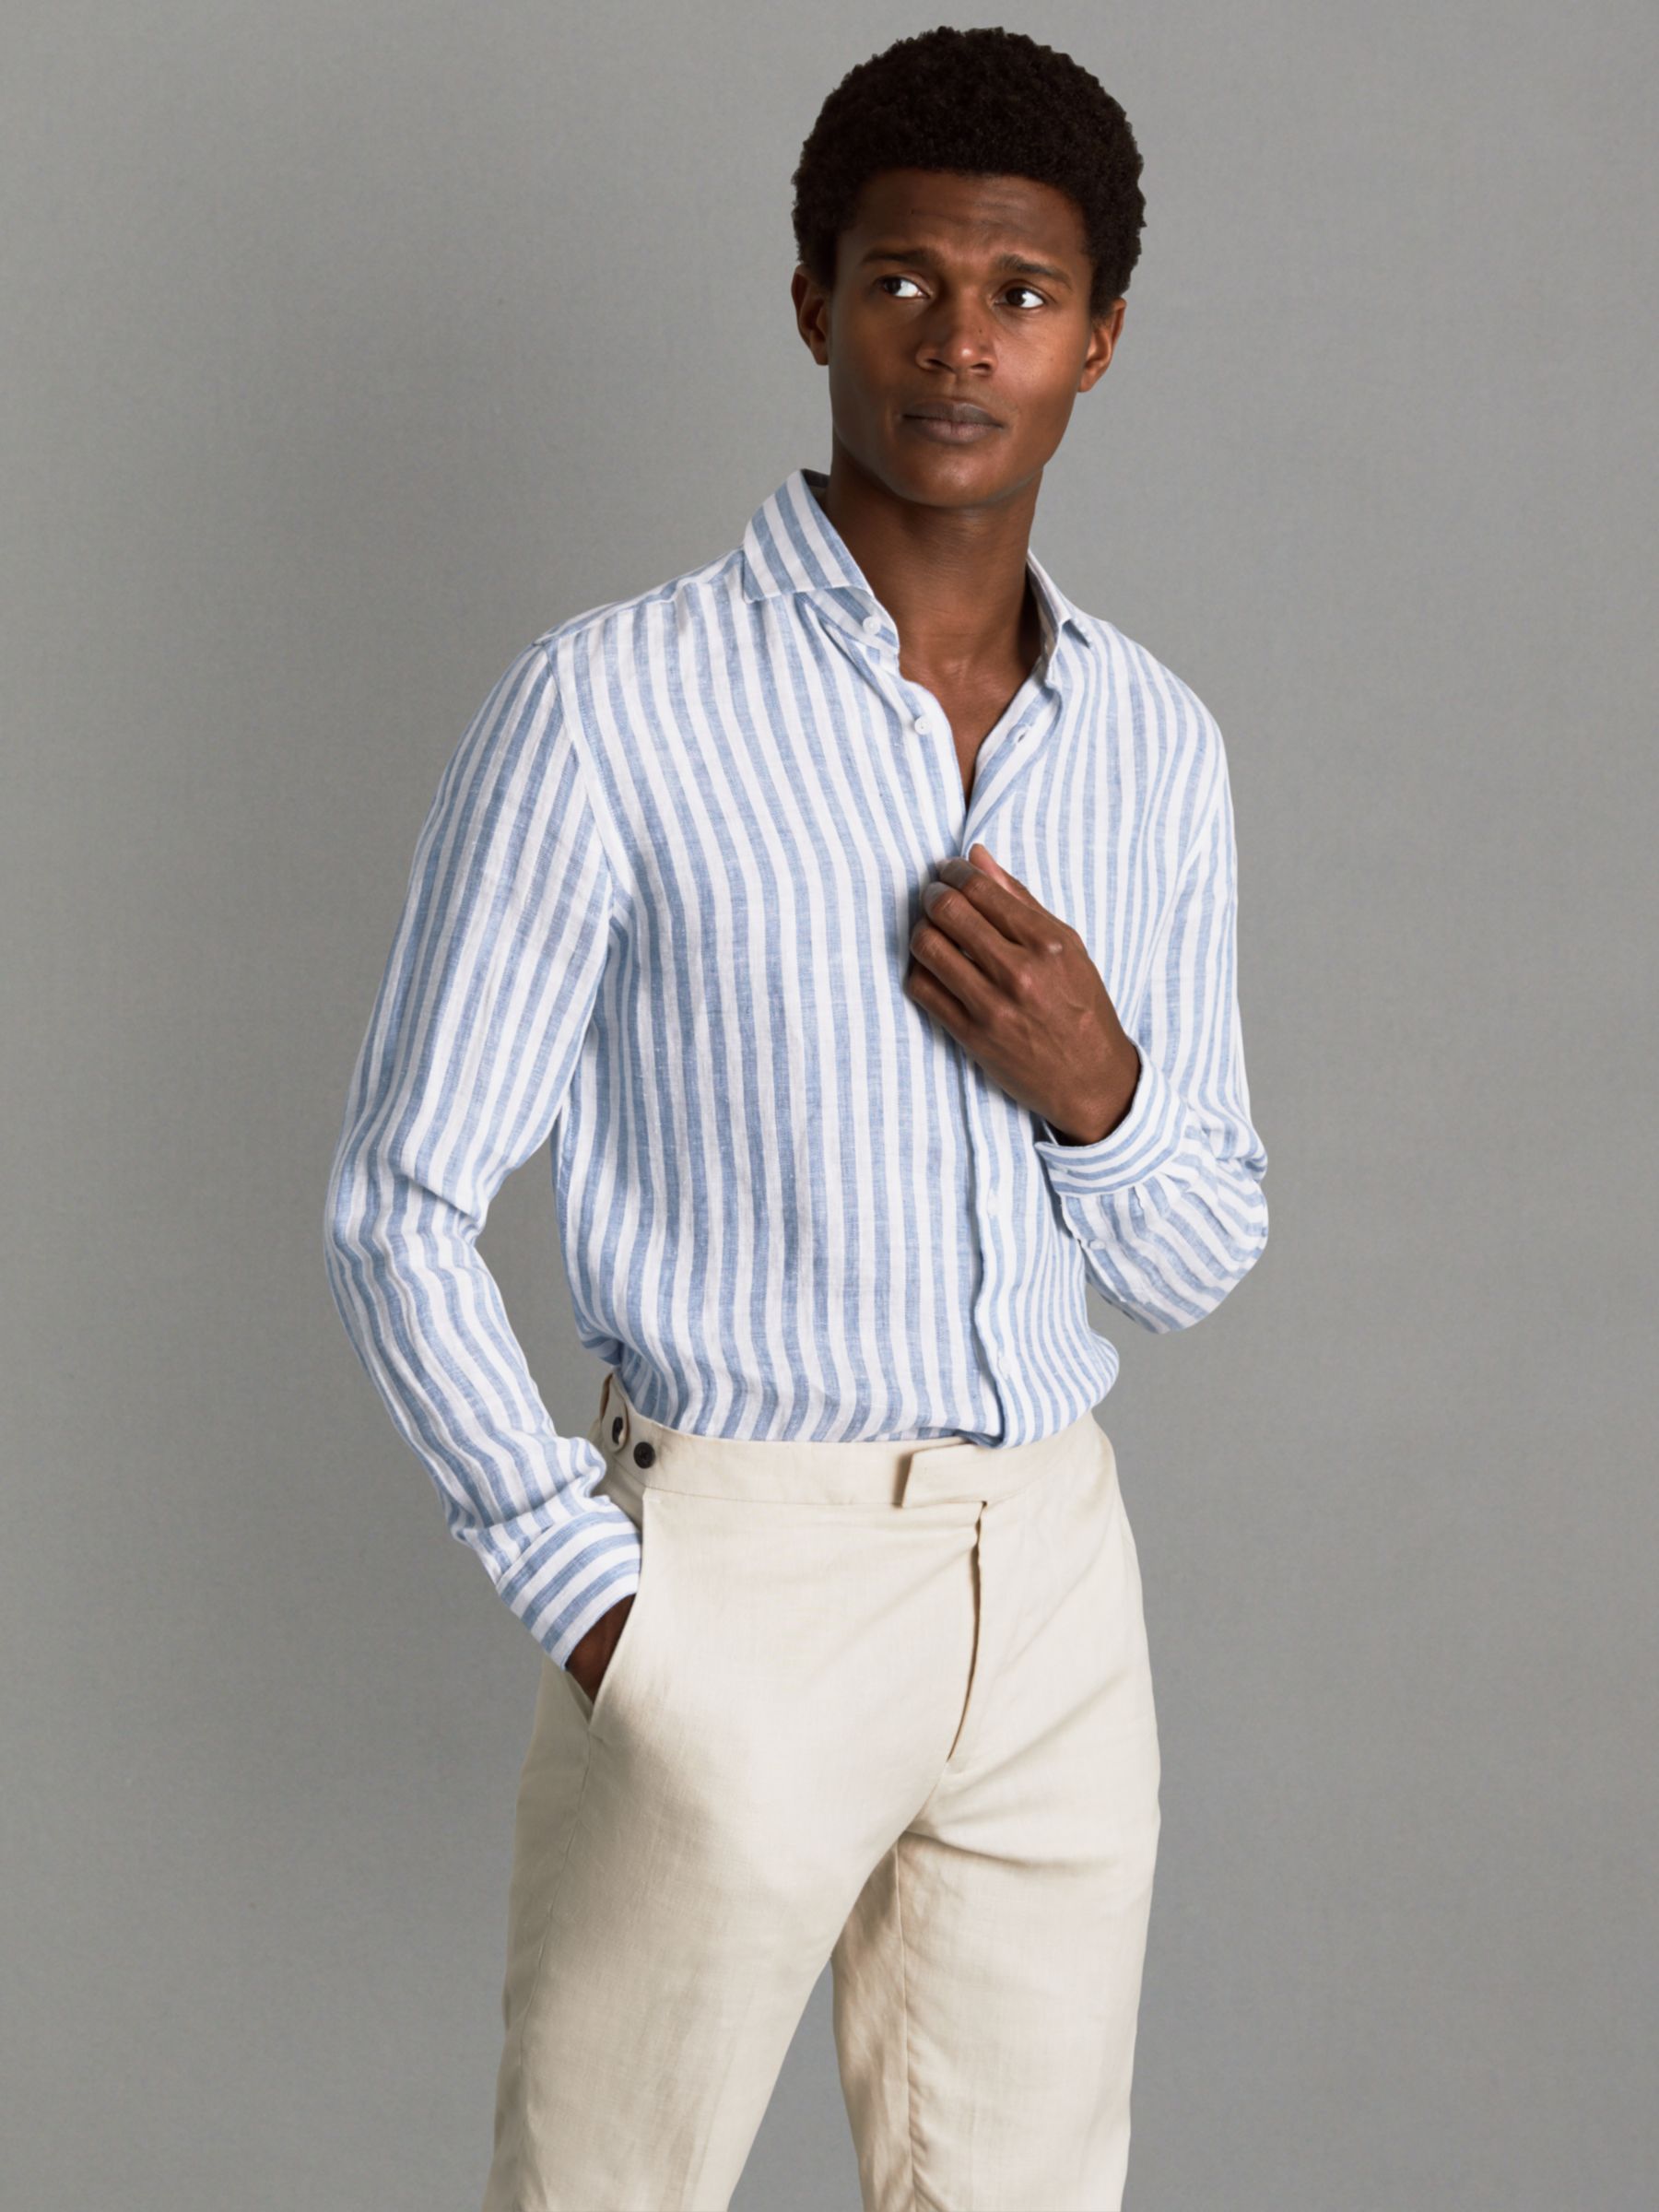 Reiss Ruban Long Sleeve Linen Stripe Shirt, Blue/White, XS